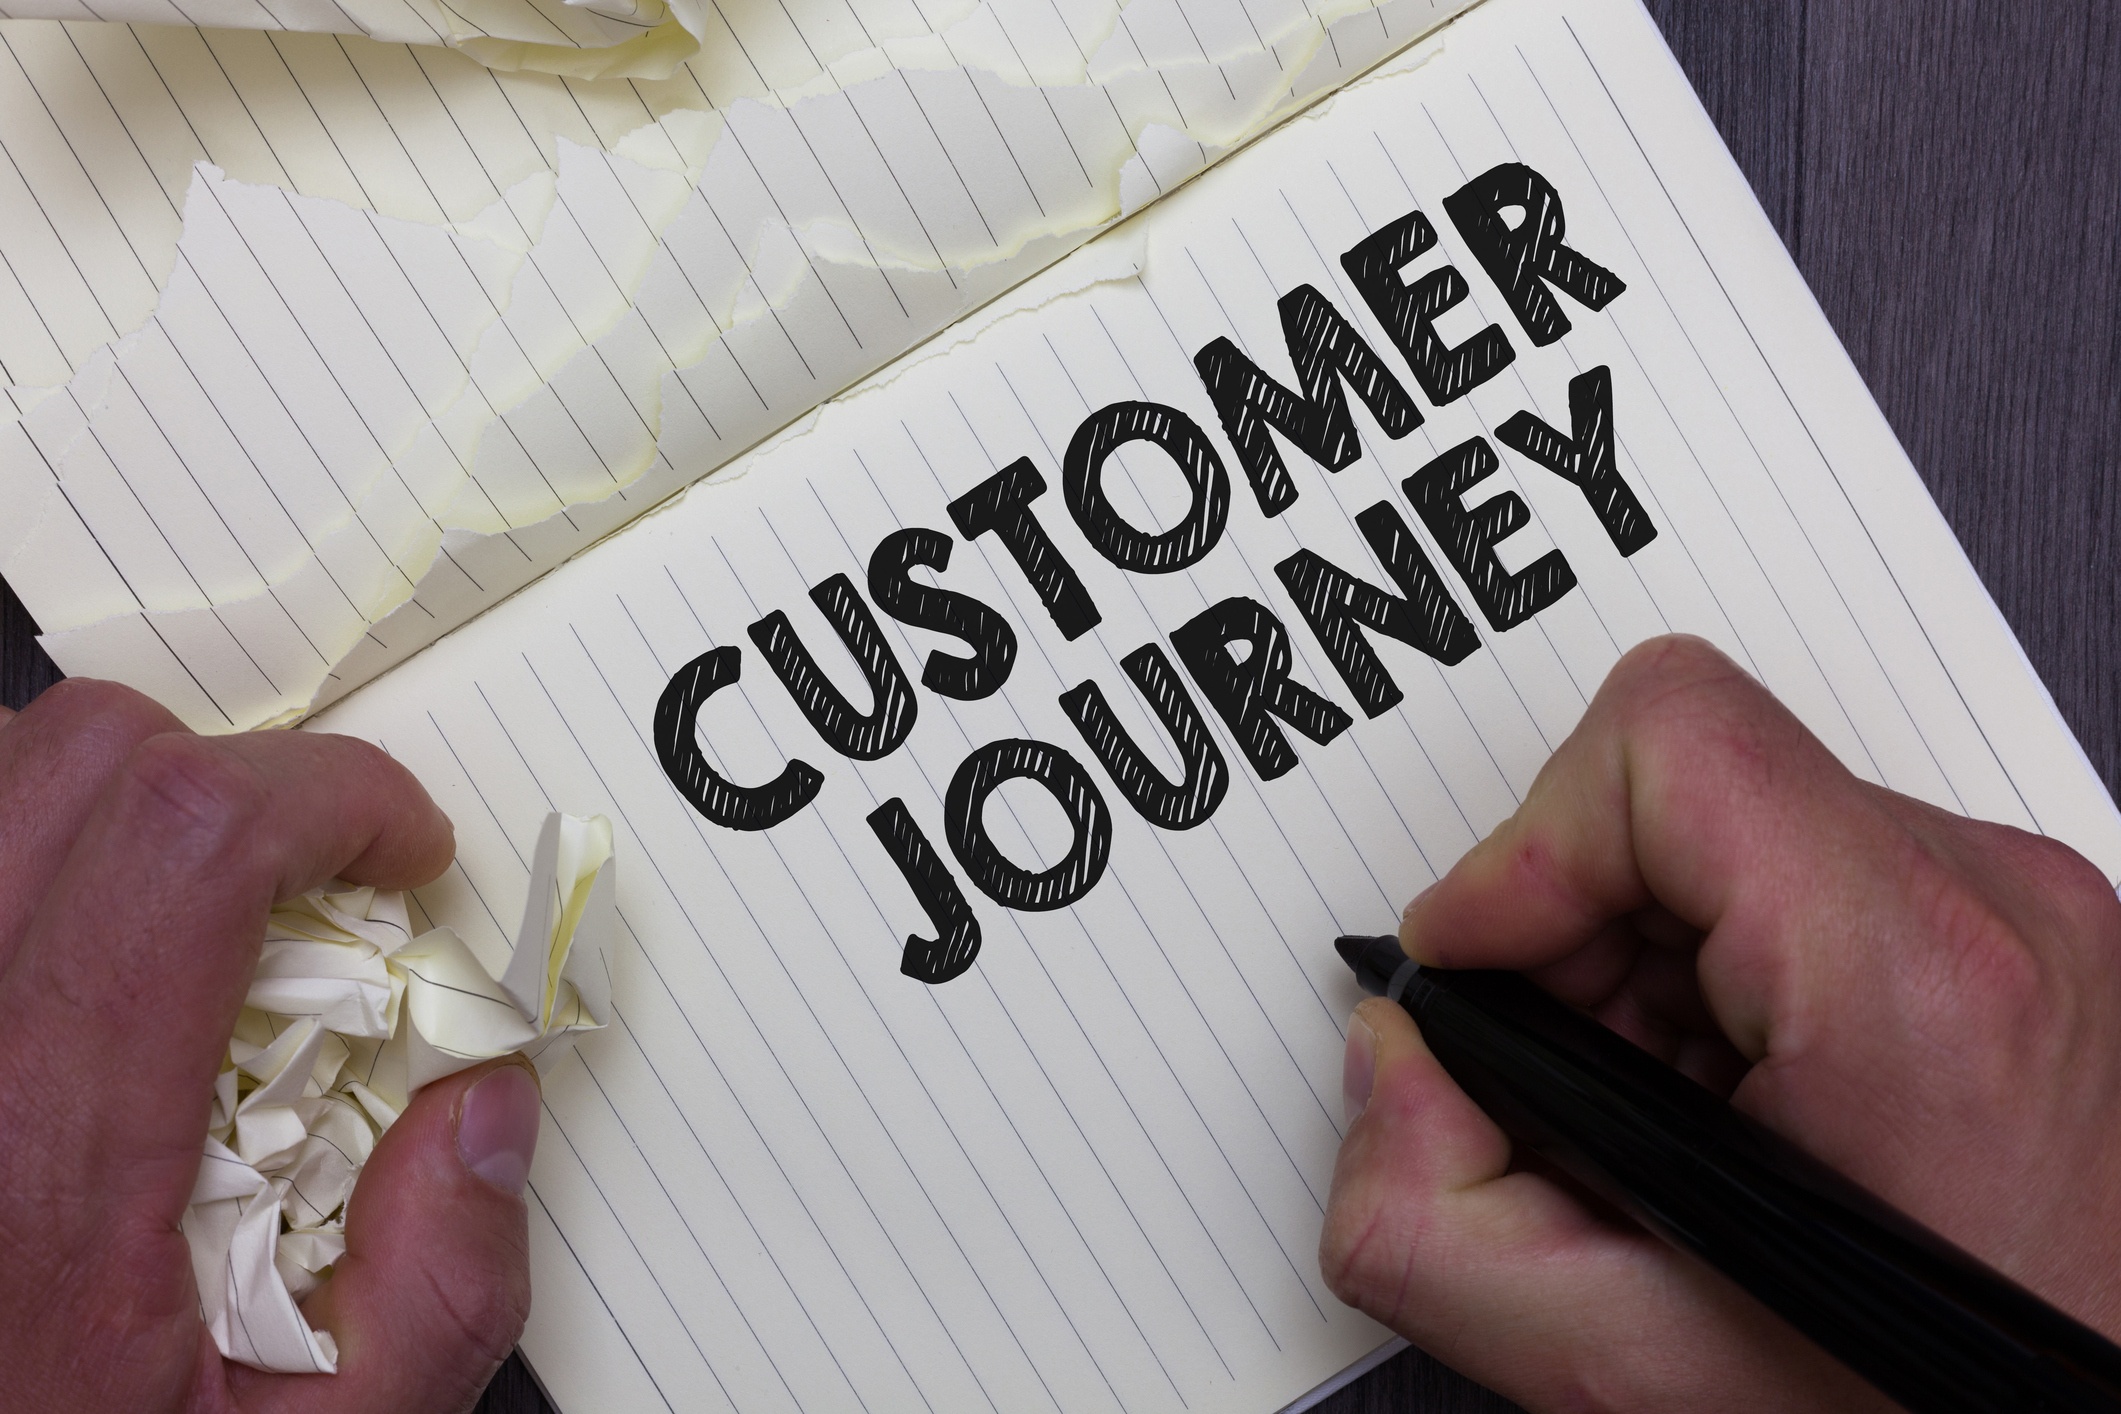 customer_journey